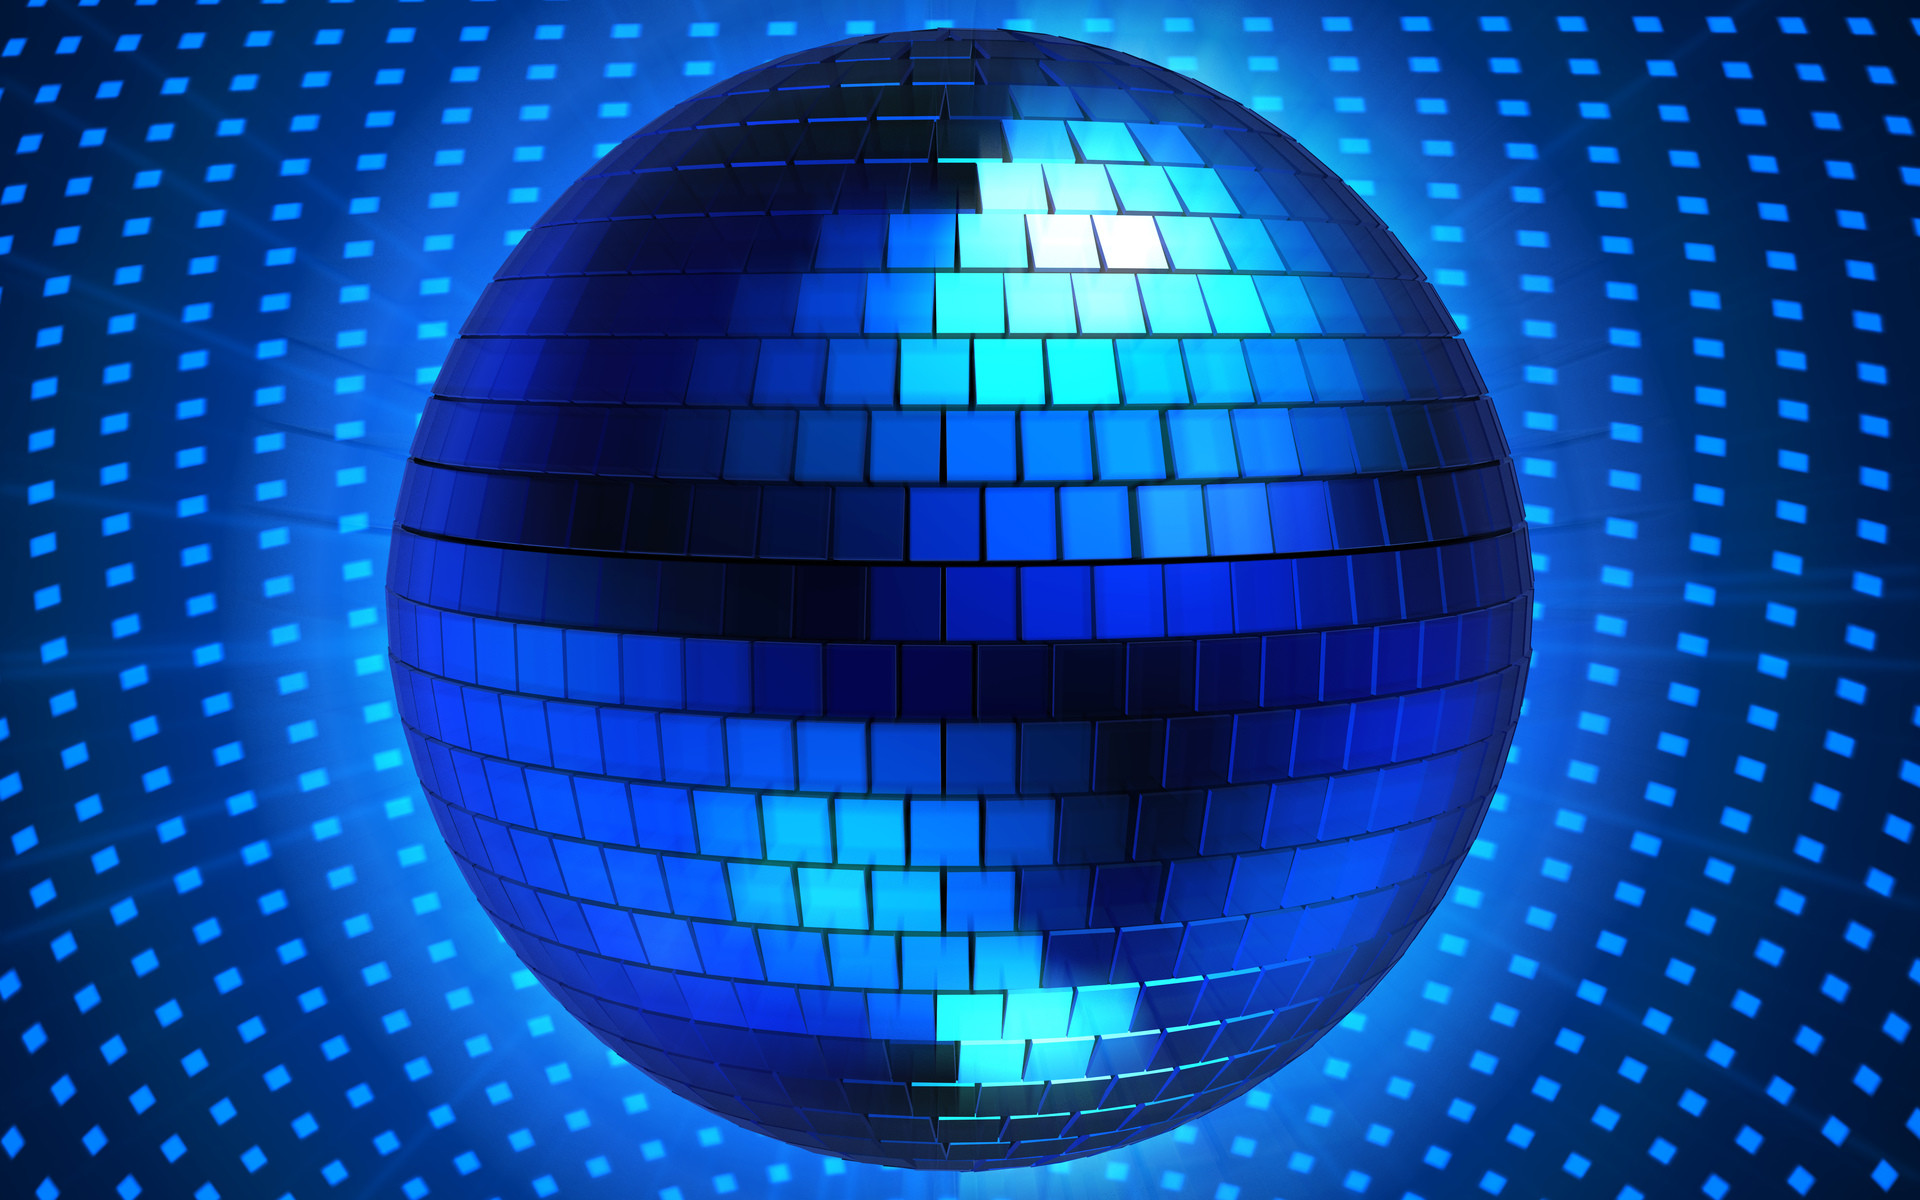 ball wallpaper,blue,disco,sphere,music,ball